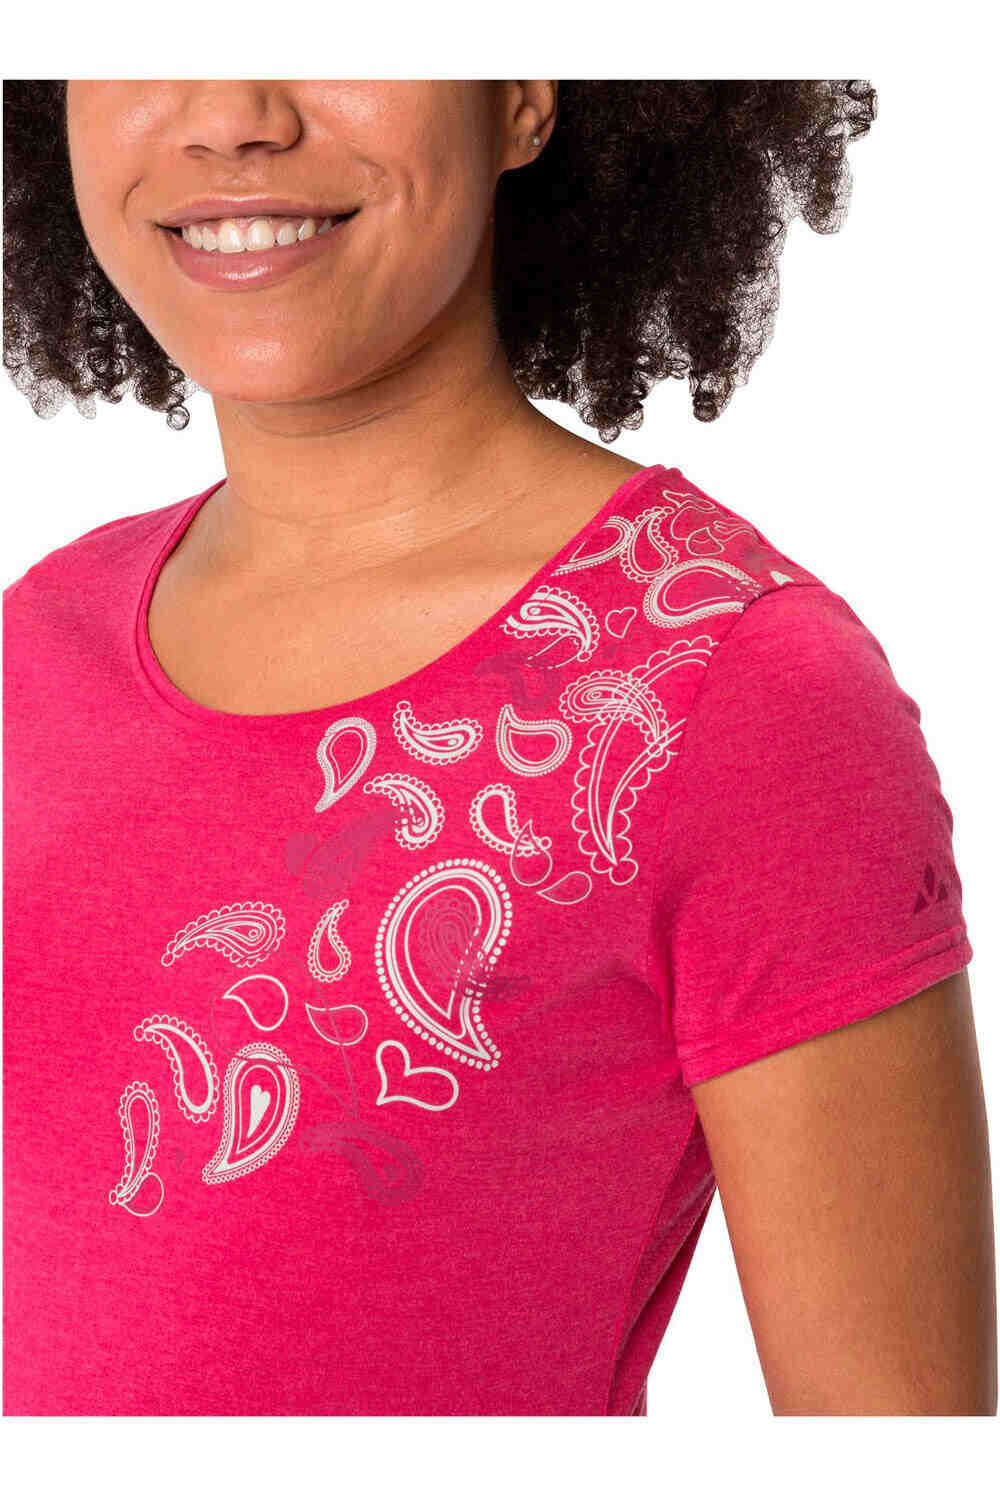 Vaude camiseta montaña manga corta mujer Women  s Skomer Print T-Shirt II vista detalle